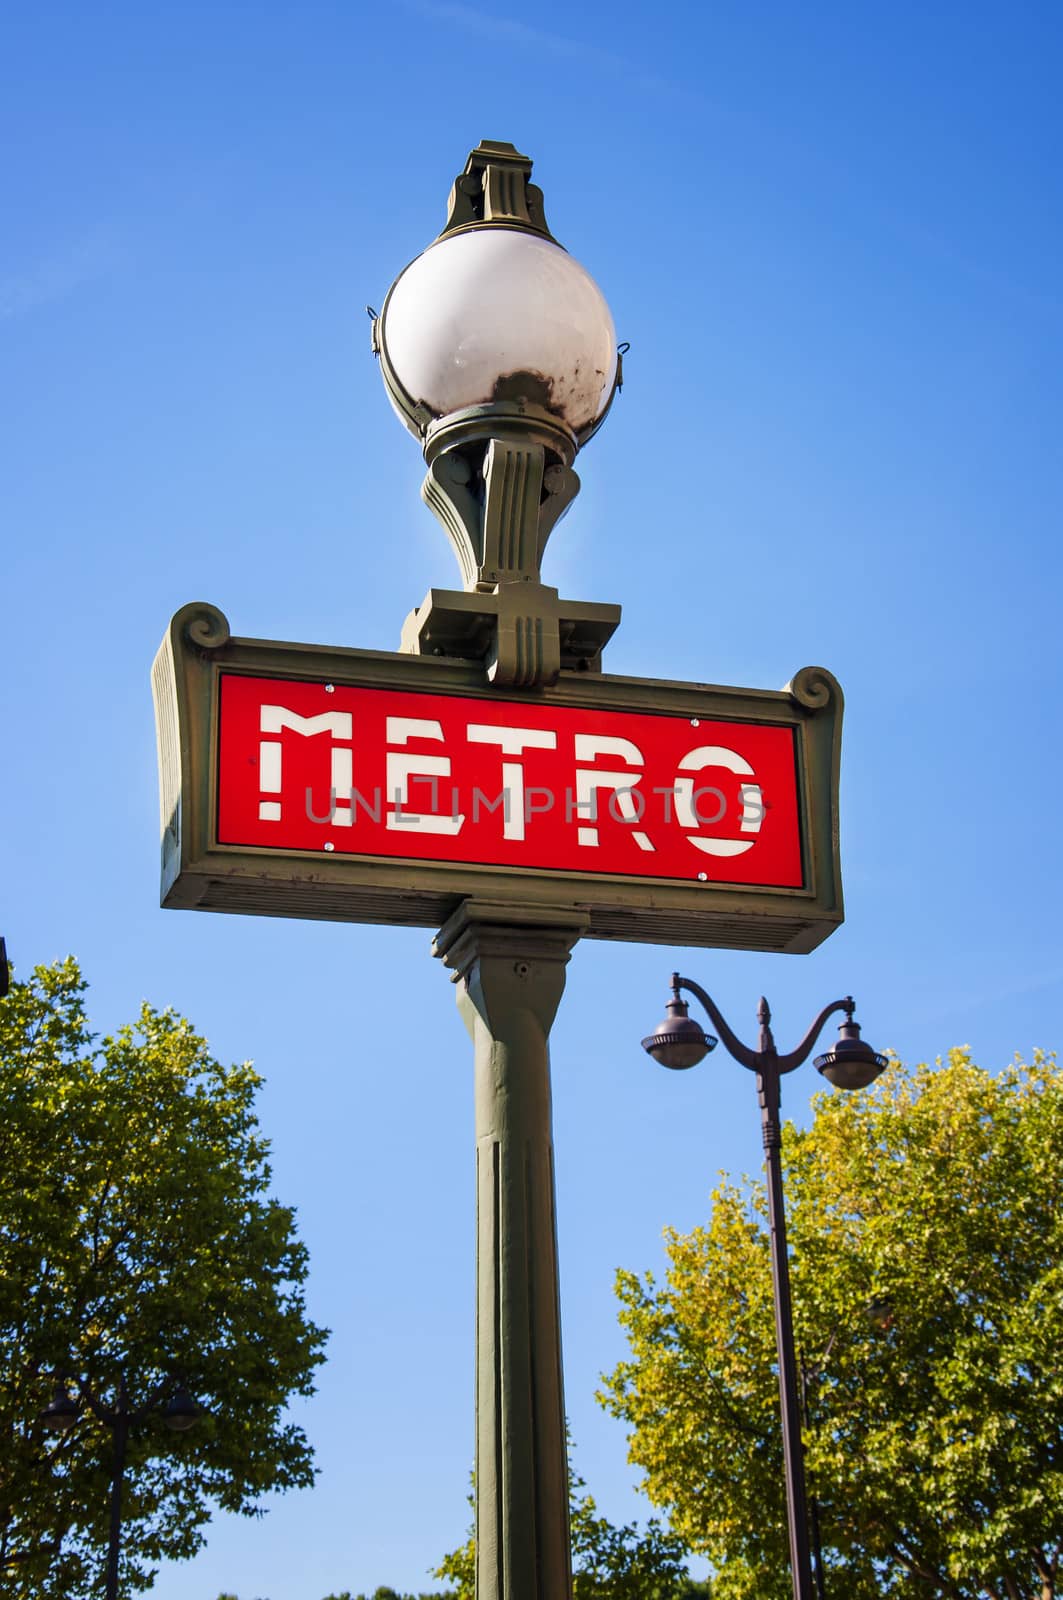 metro signboard in Paris city